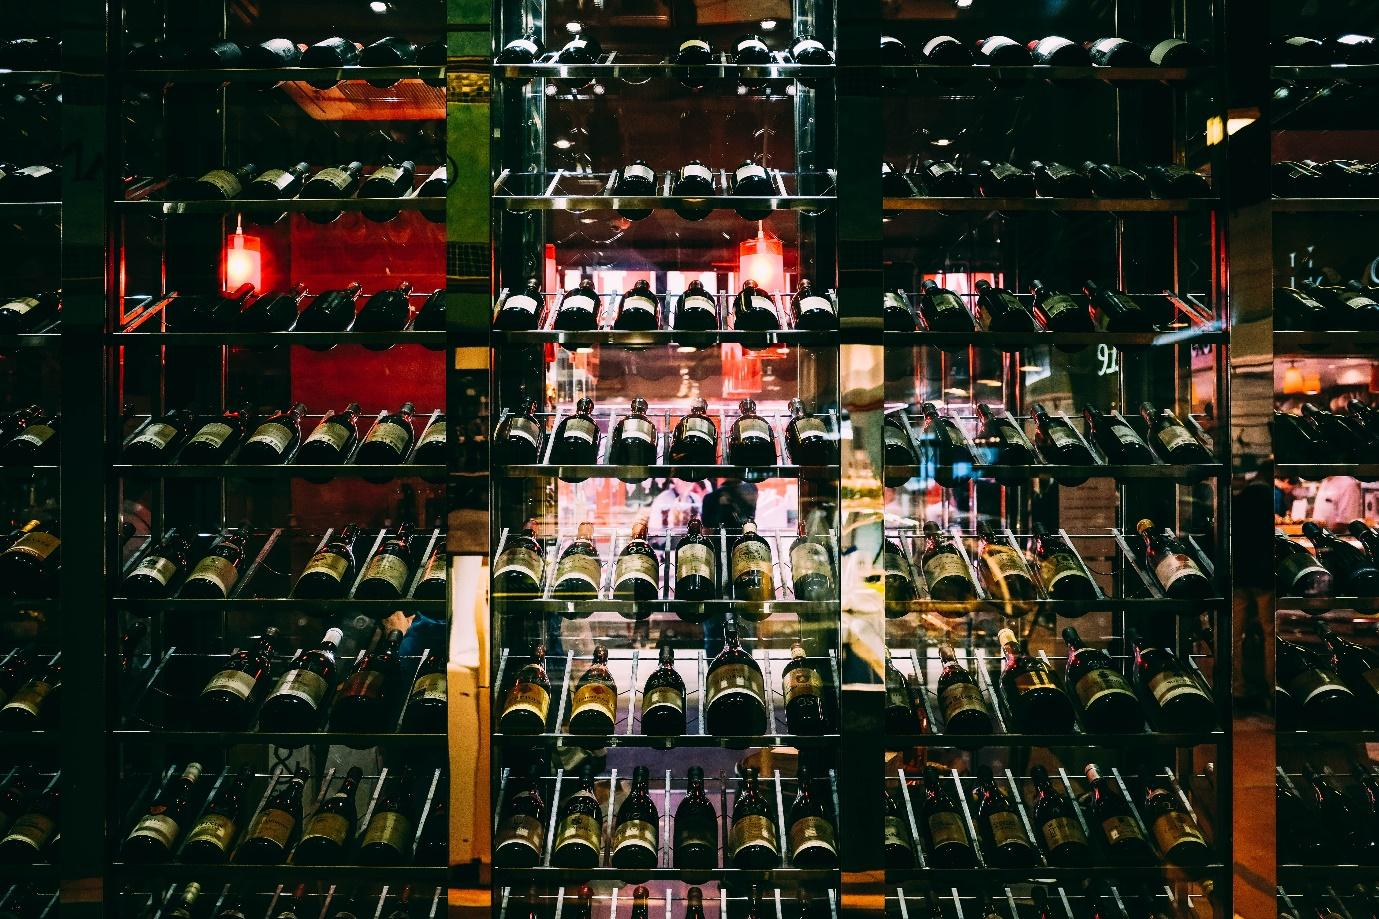 Wine racks in a cellar